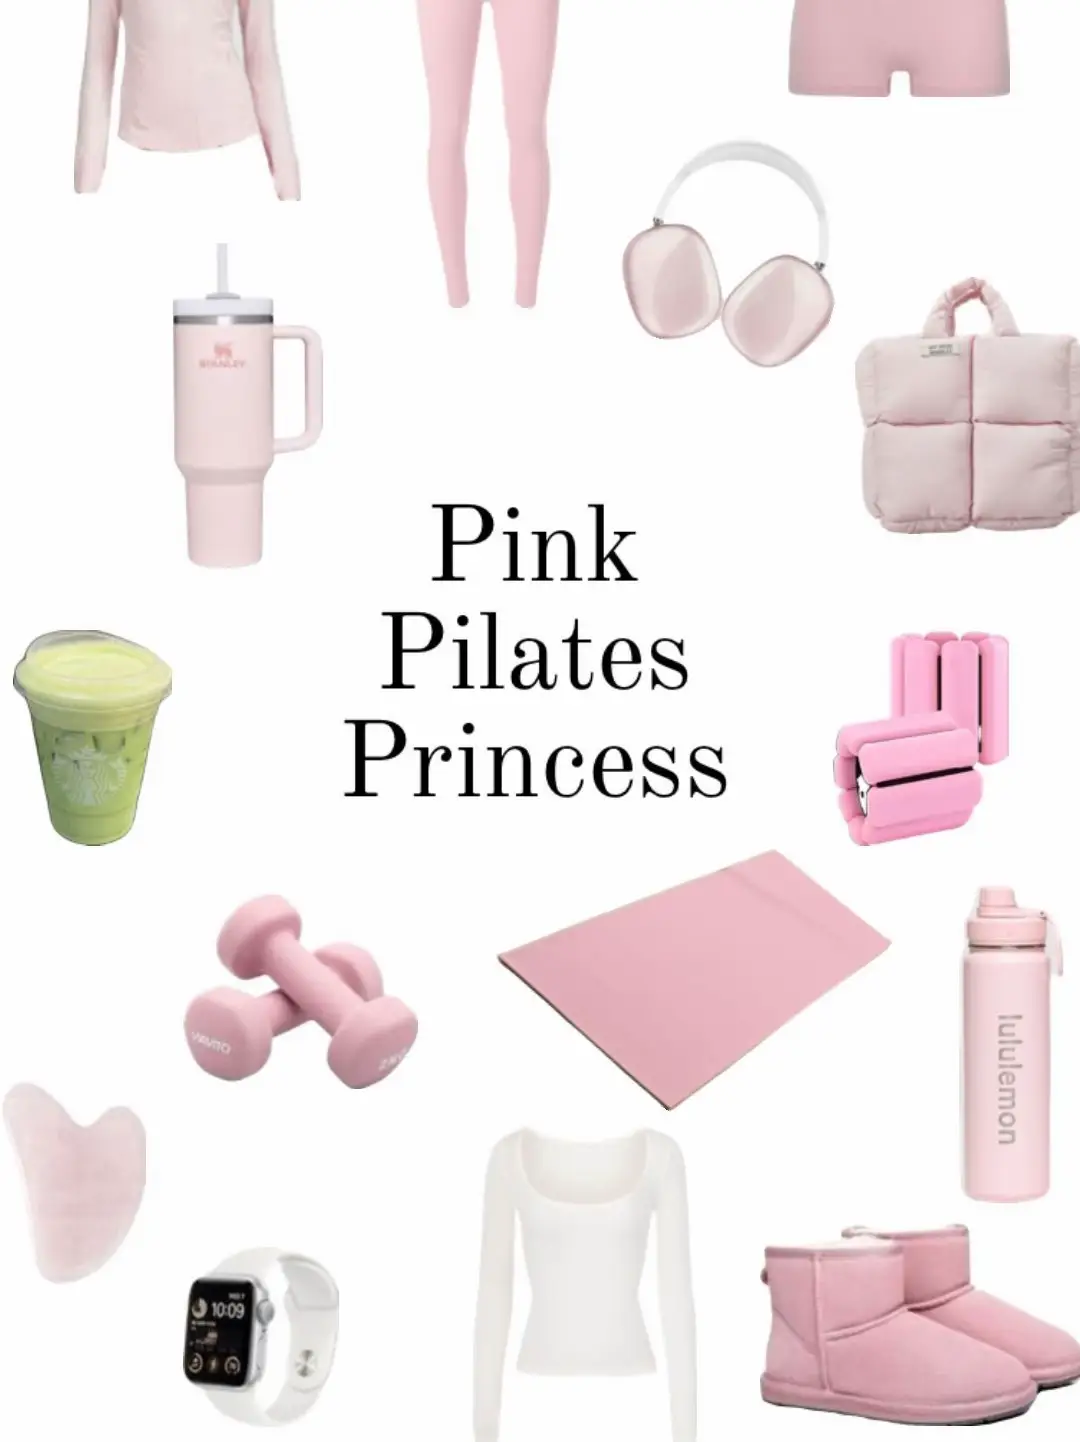 10 Pink Pilates princess ideas  pink girly things, pretty pink